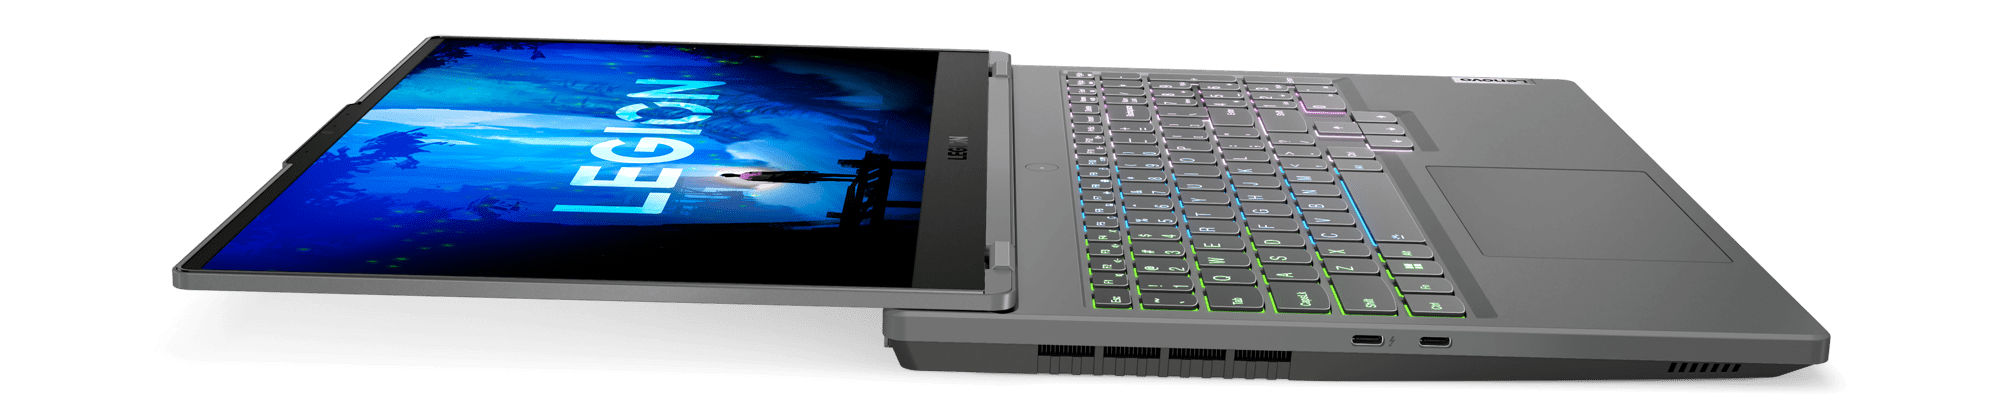 The Lenovo Legion 5i/5 laptop shown in Storm Grey